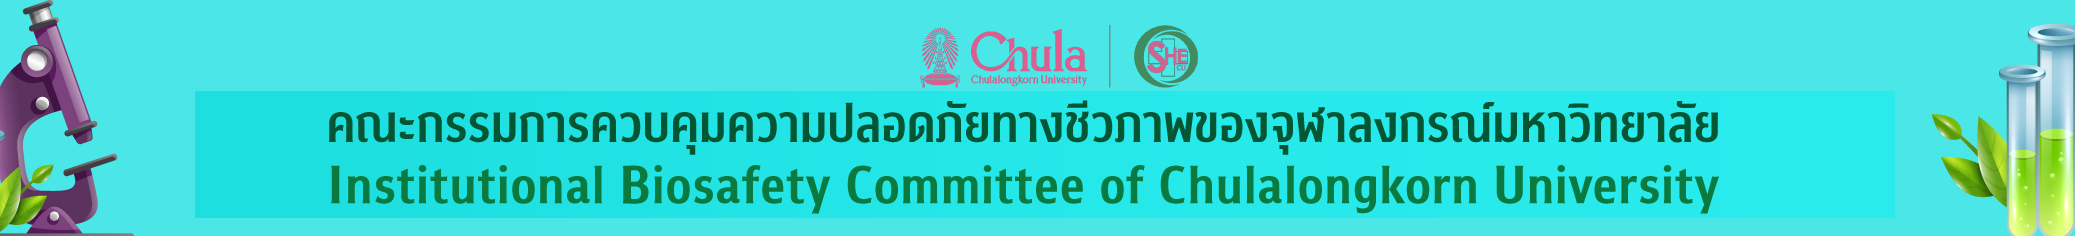 cuibc-logo